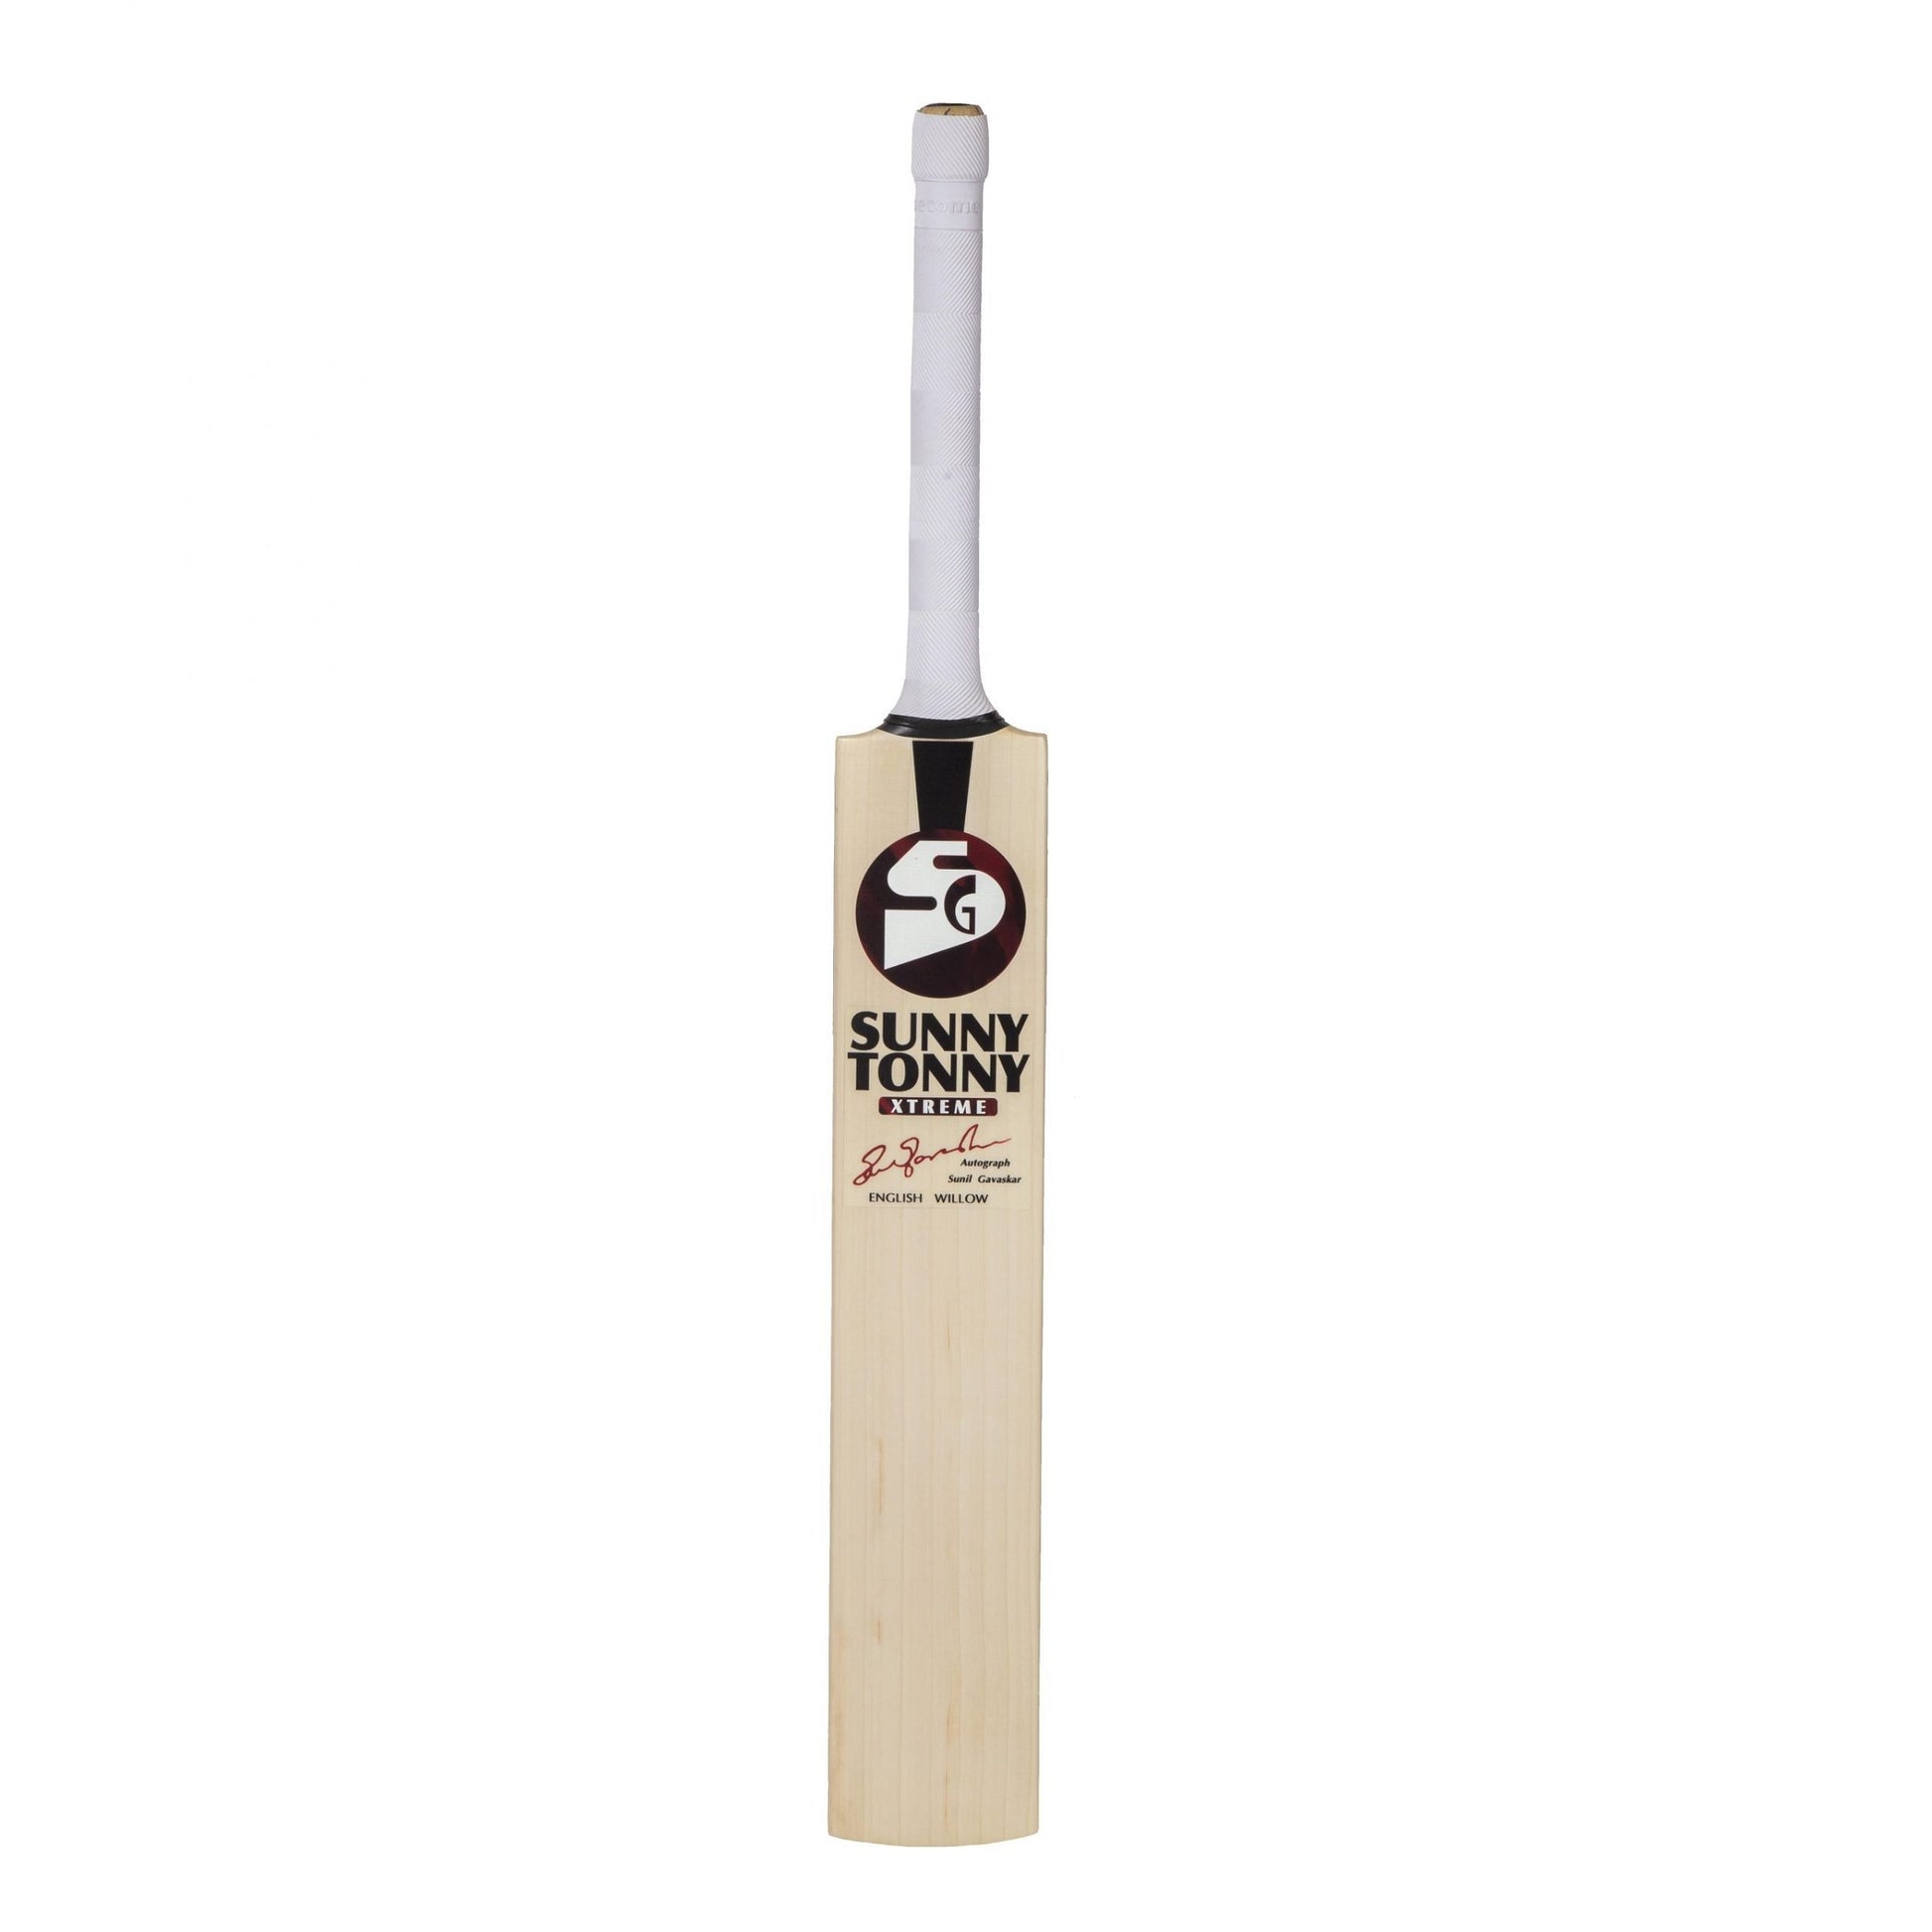 SG Sunny Tonny Xtreme - Grade 2 Worlds Finest English Willow Cricket Bat (Leather Ball)